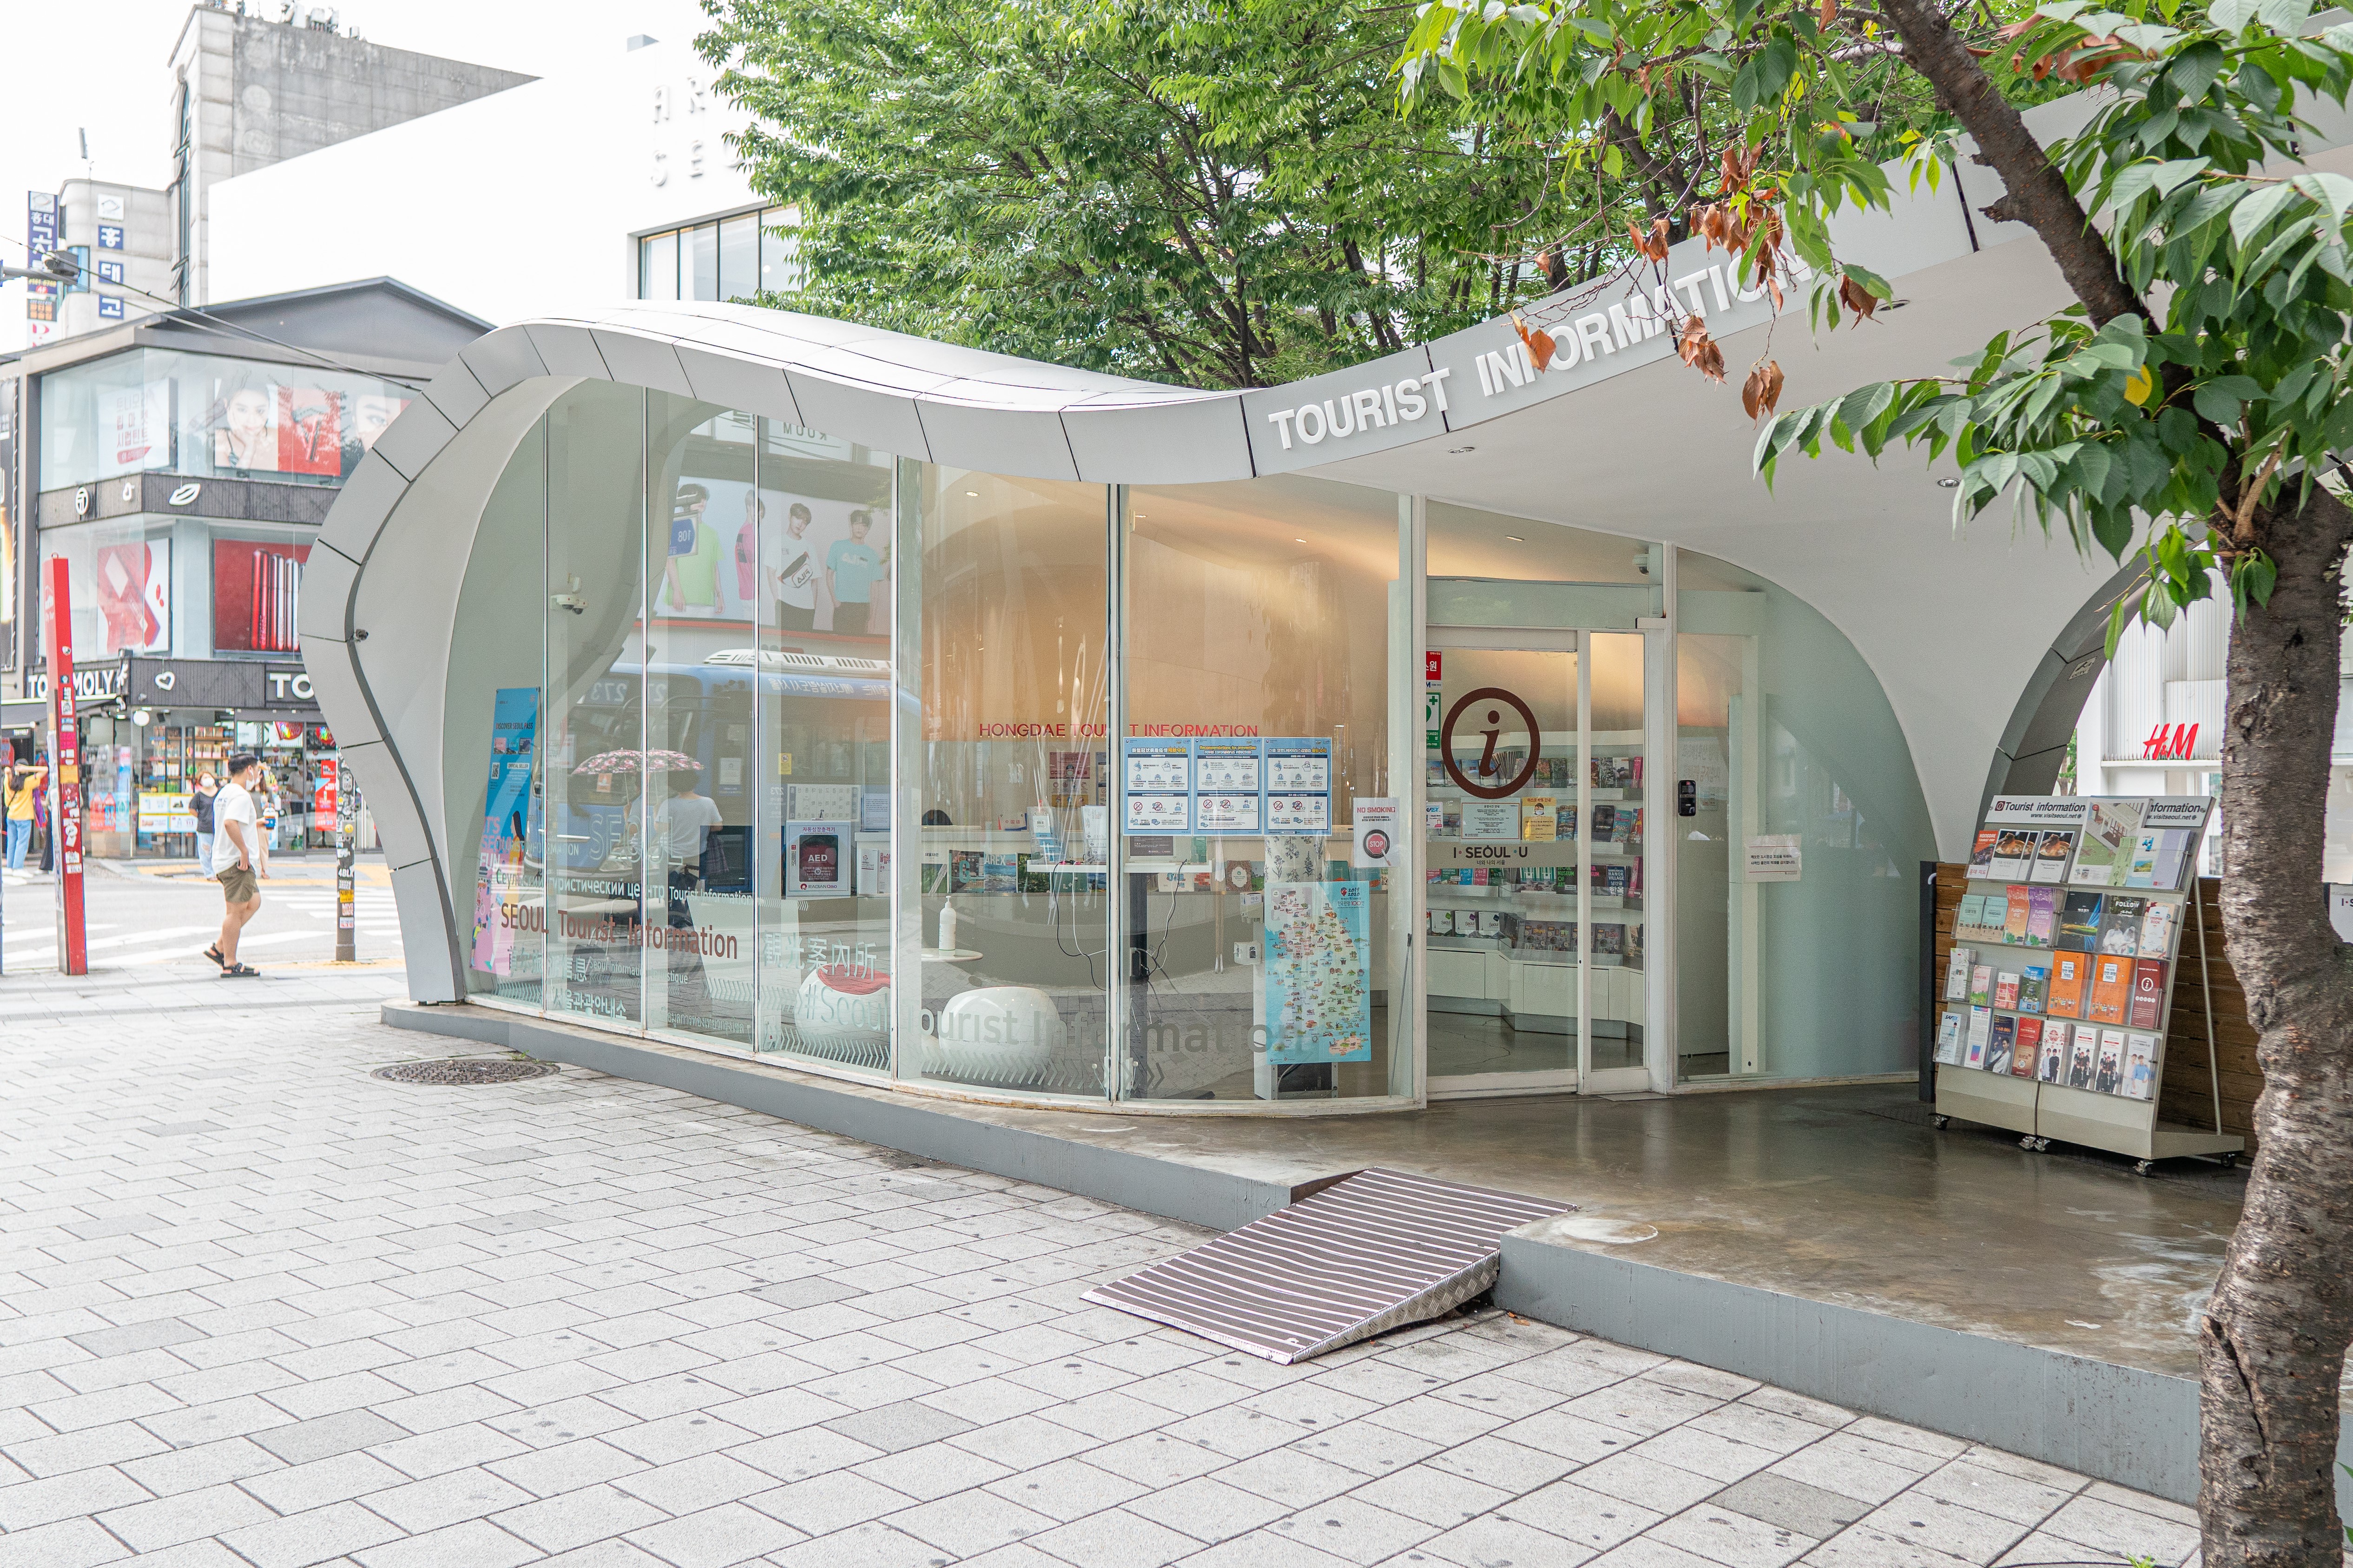 Hongdae Tourist Information 0 : All-glass Hongik University Tourist Information Center with a distinctive design